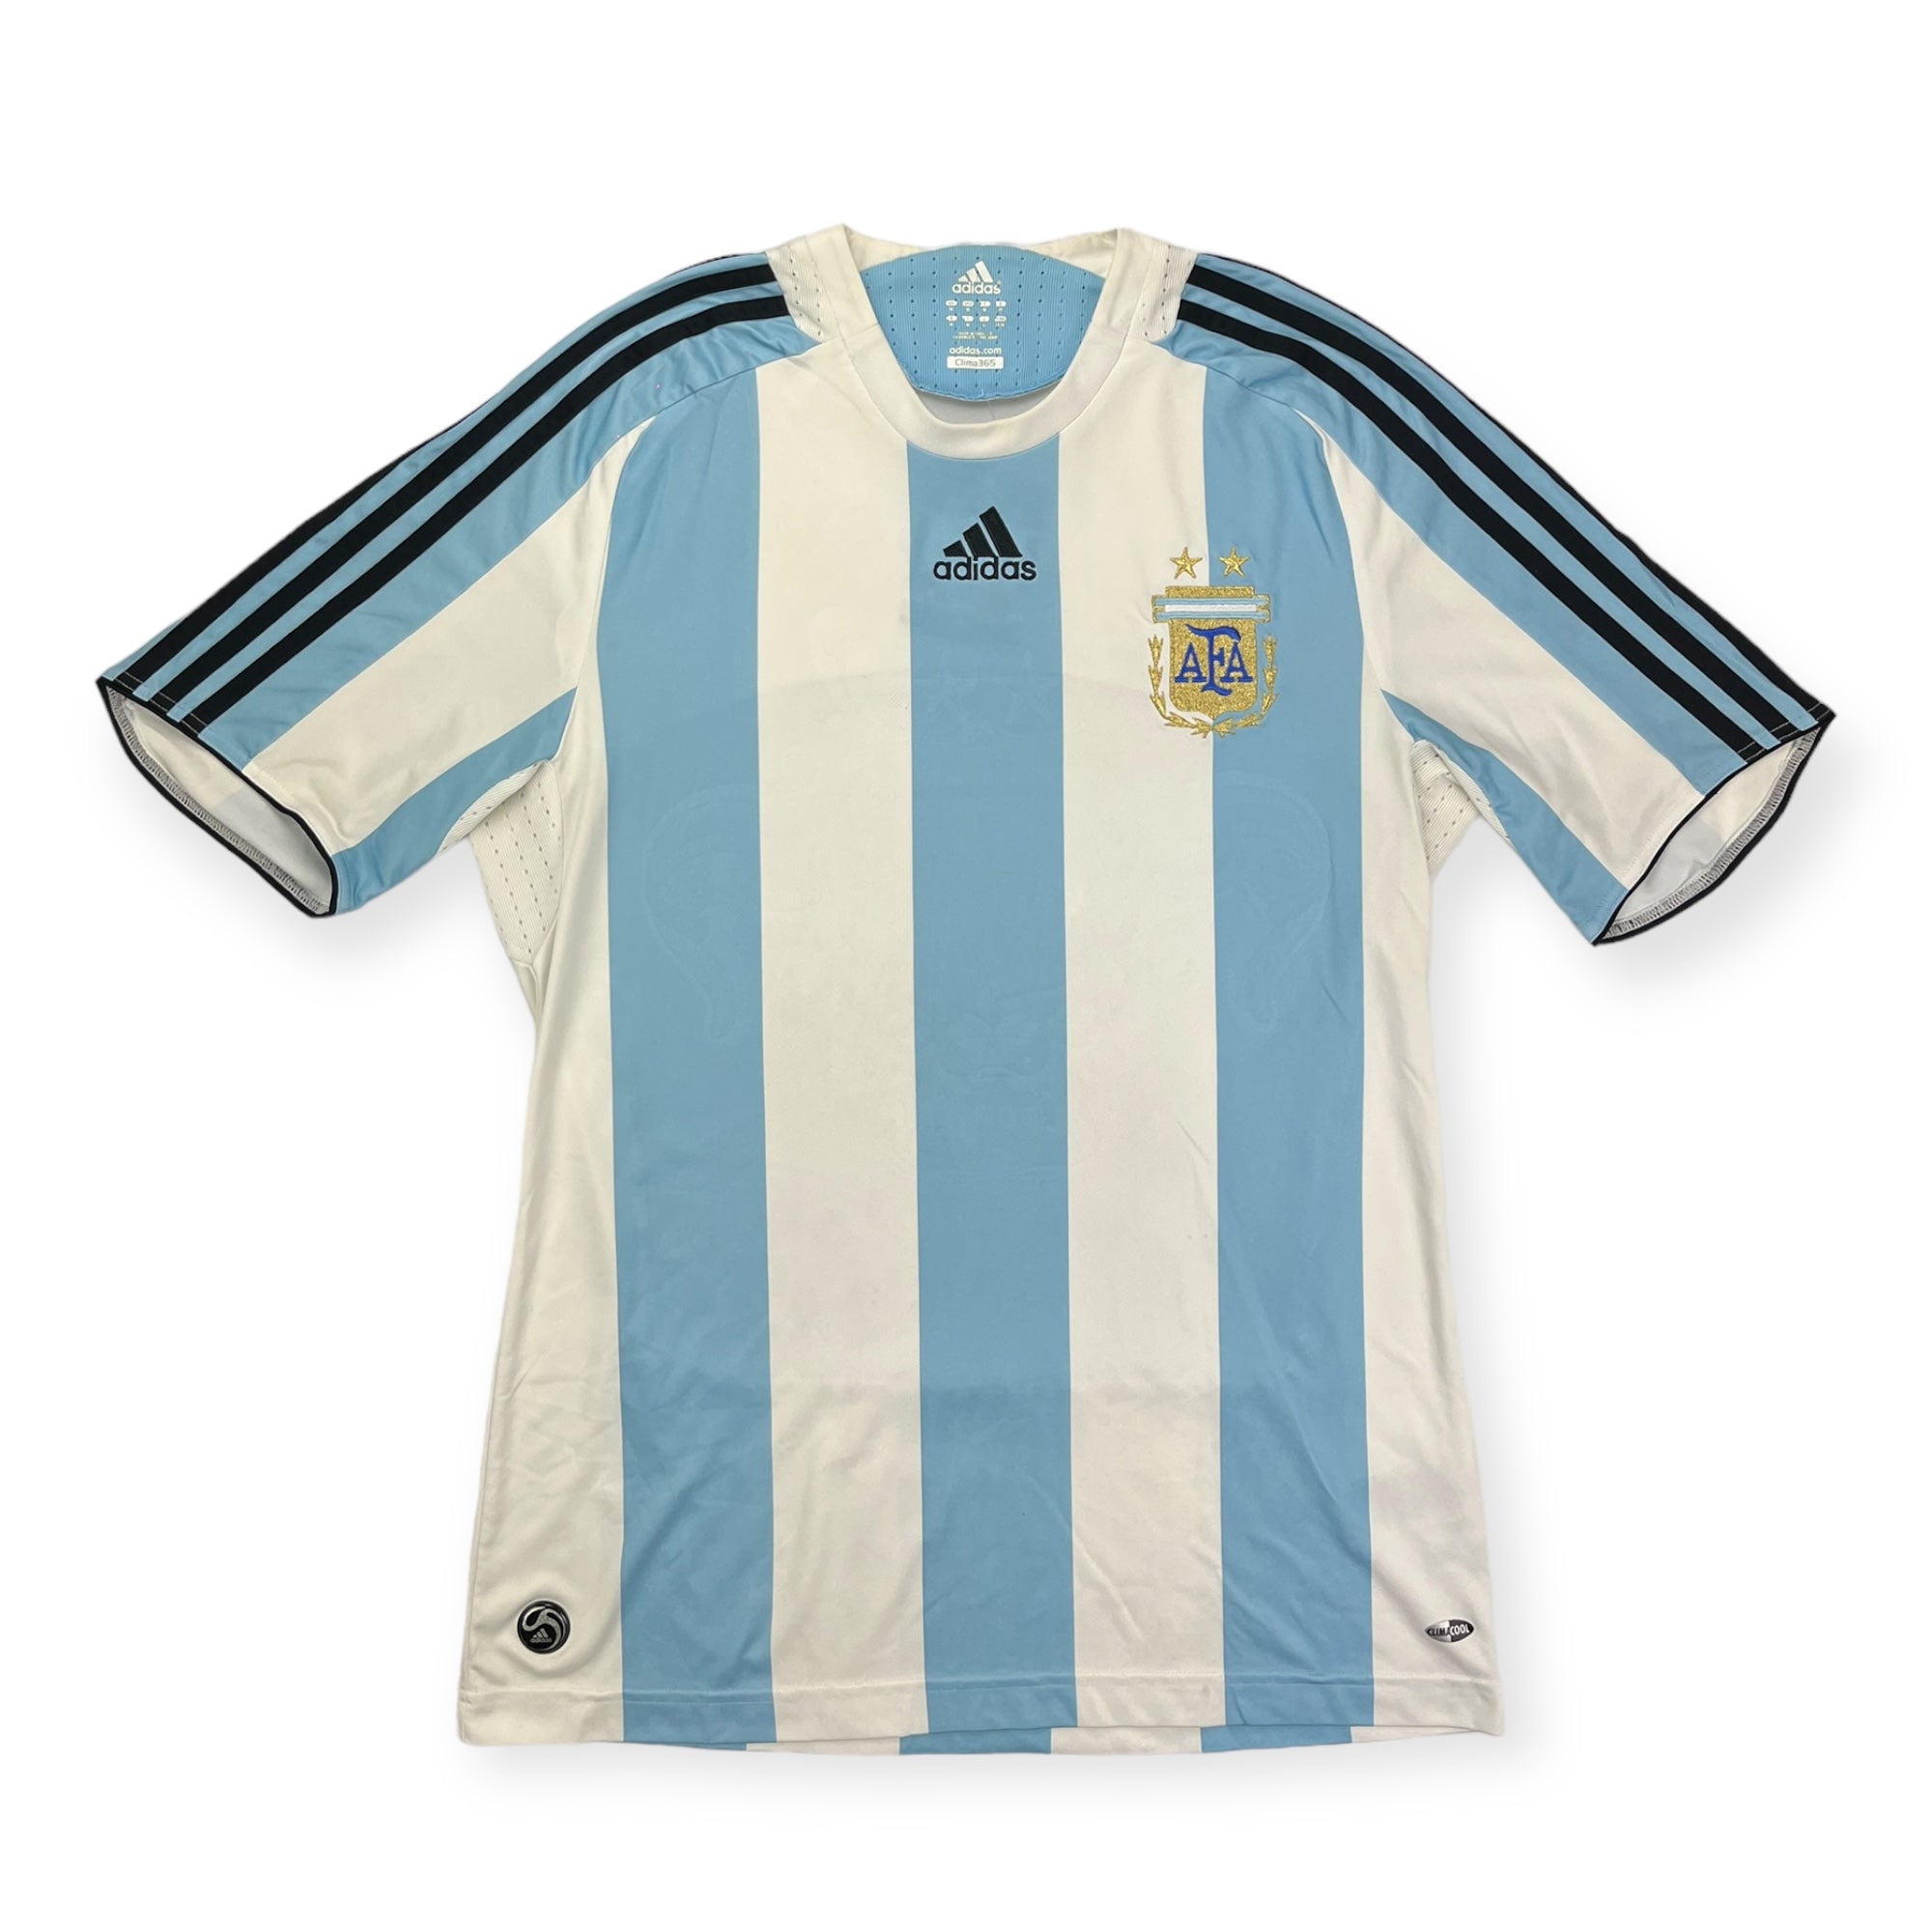 Argentina 2007 Home Shirt